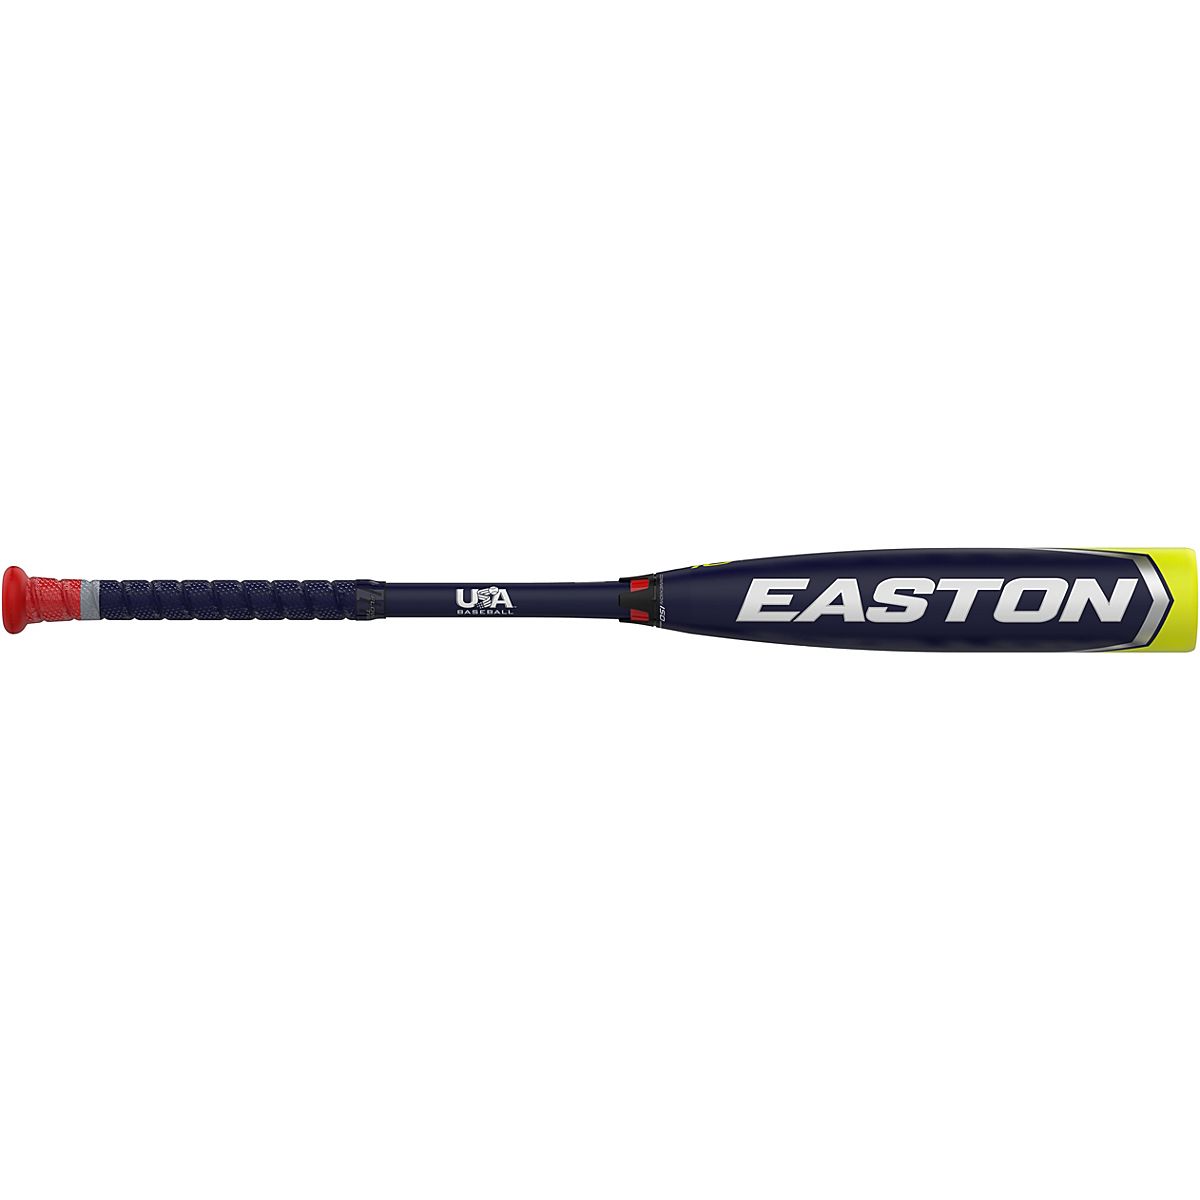 EASTON 360 INST RT YOUTH BASEBALL  CLEATS SZ  US 3 blk/char/wht 